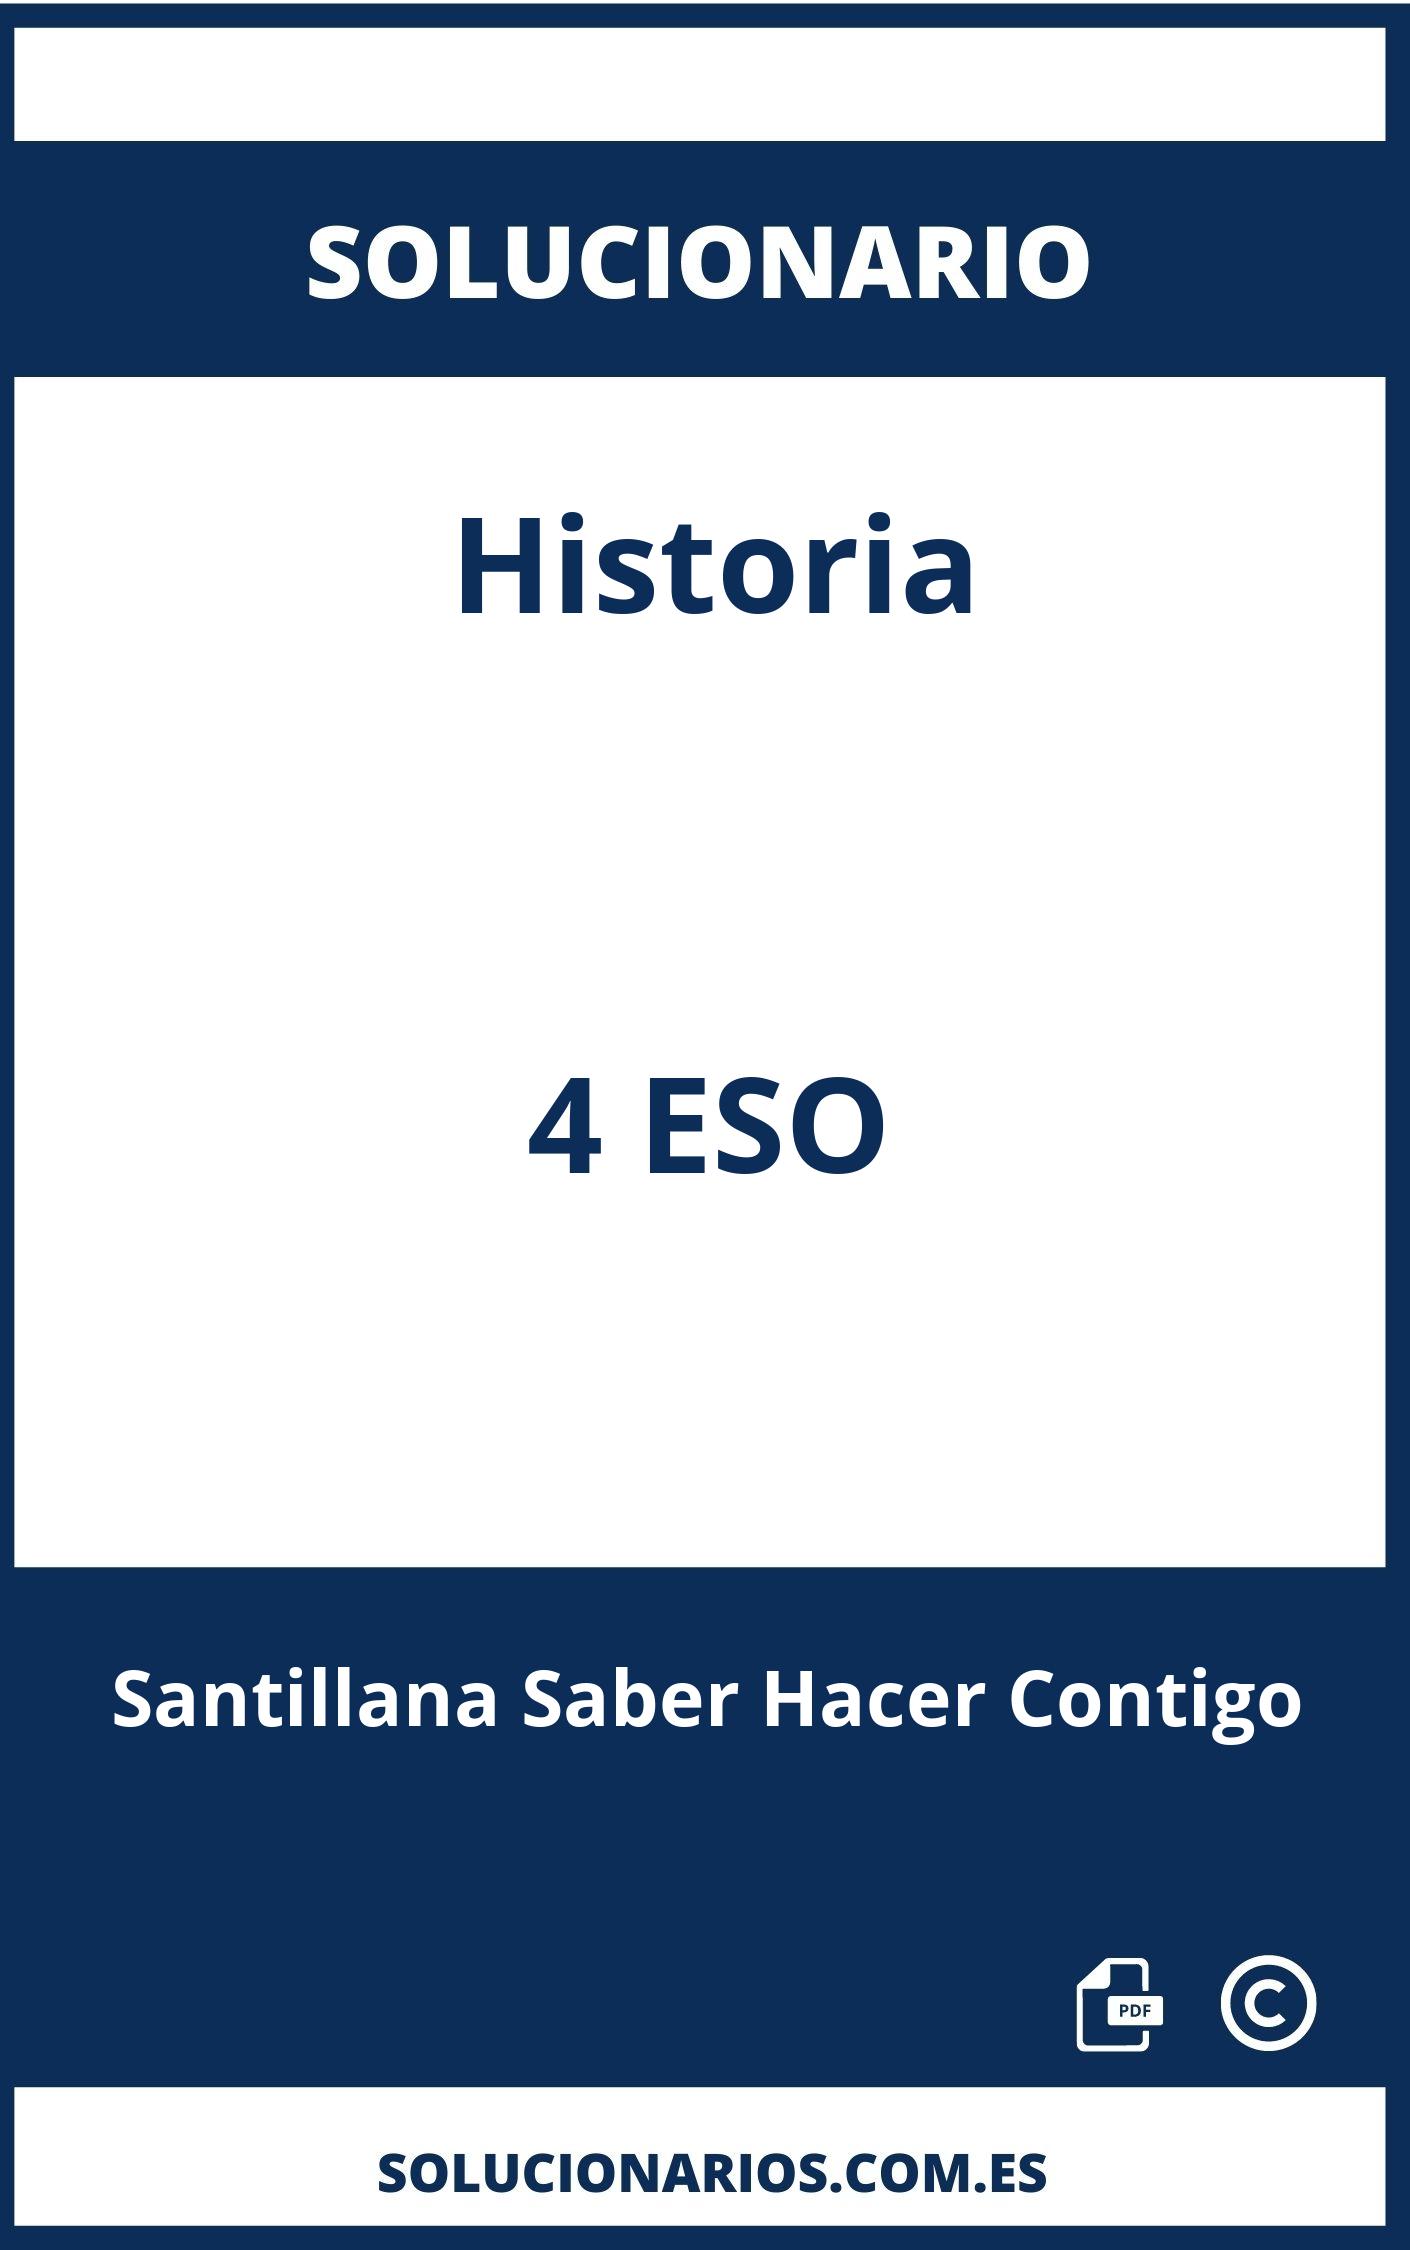 Solucionario Historia 4 ESO Santillana Saber Hacer Contigo